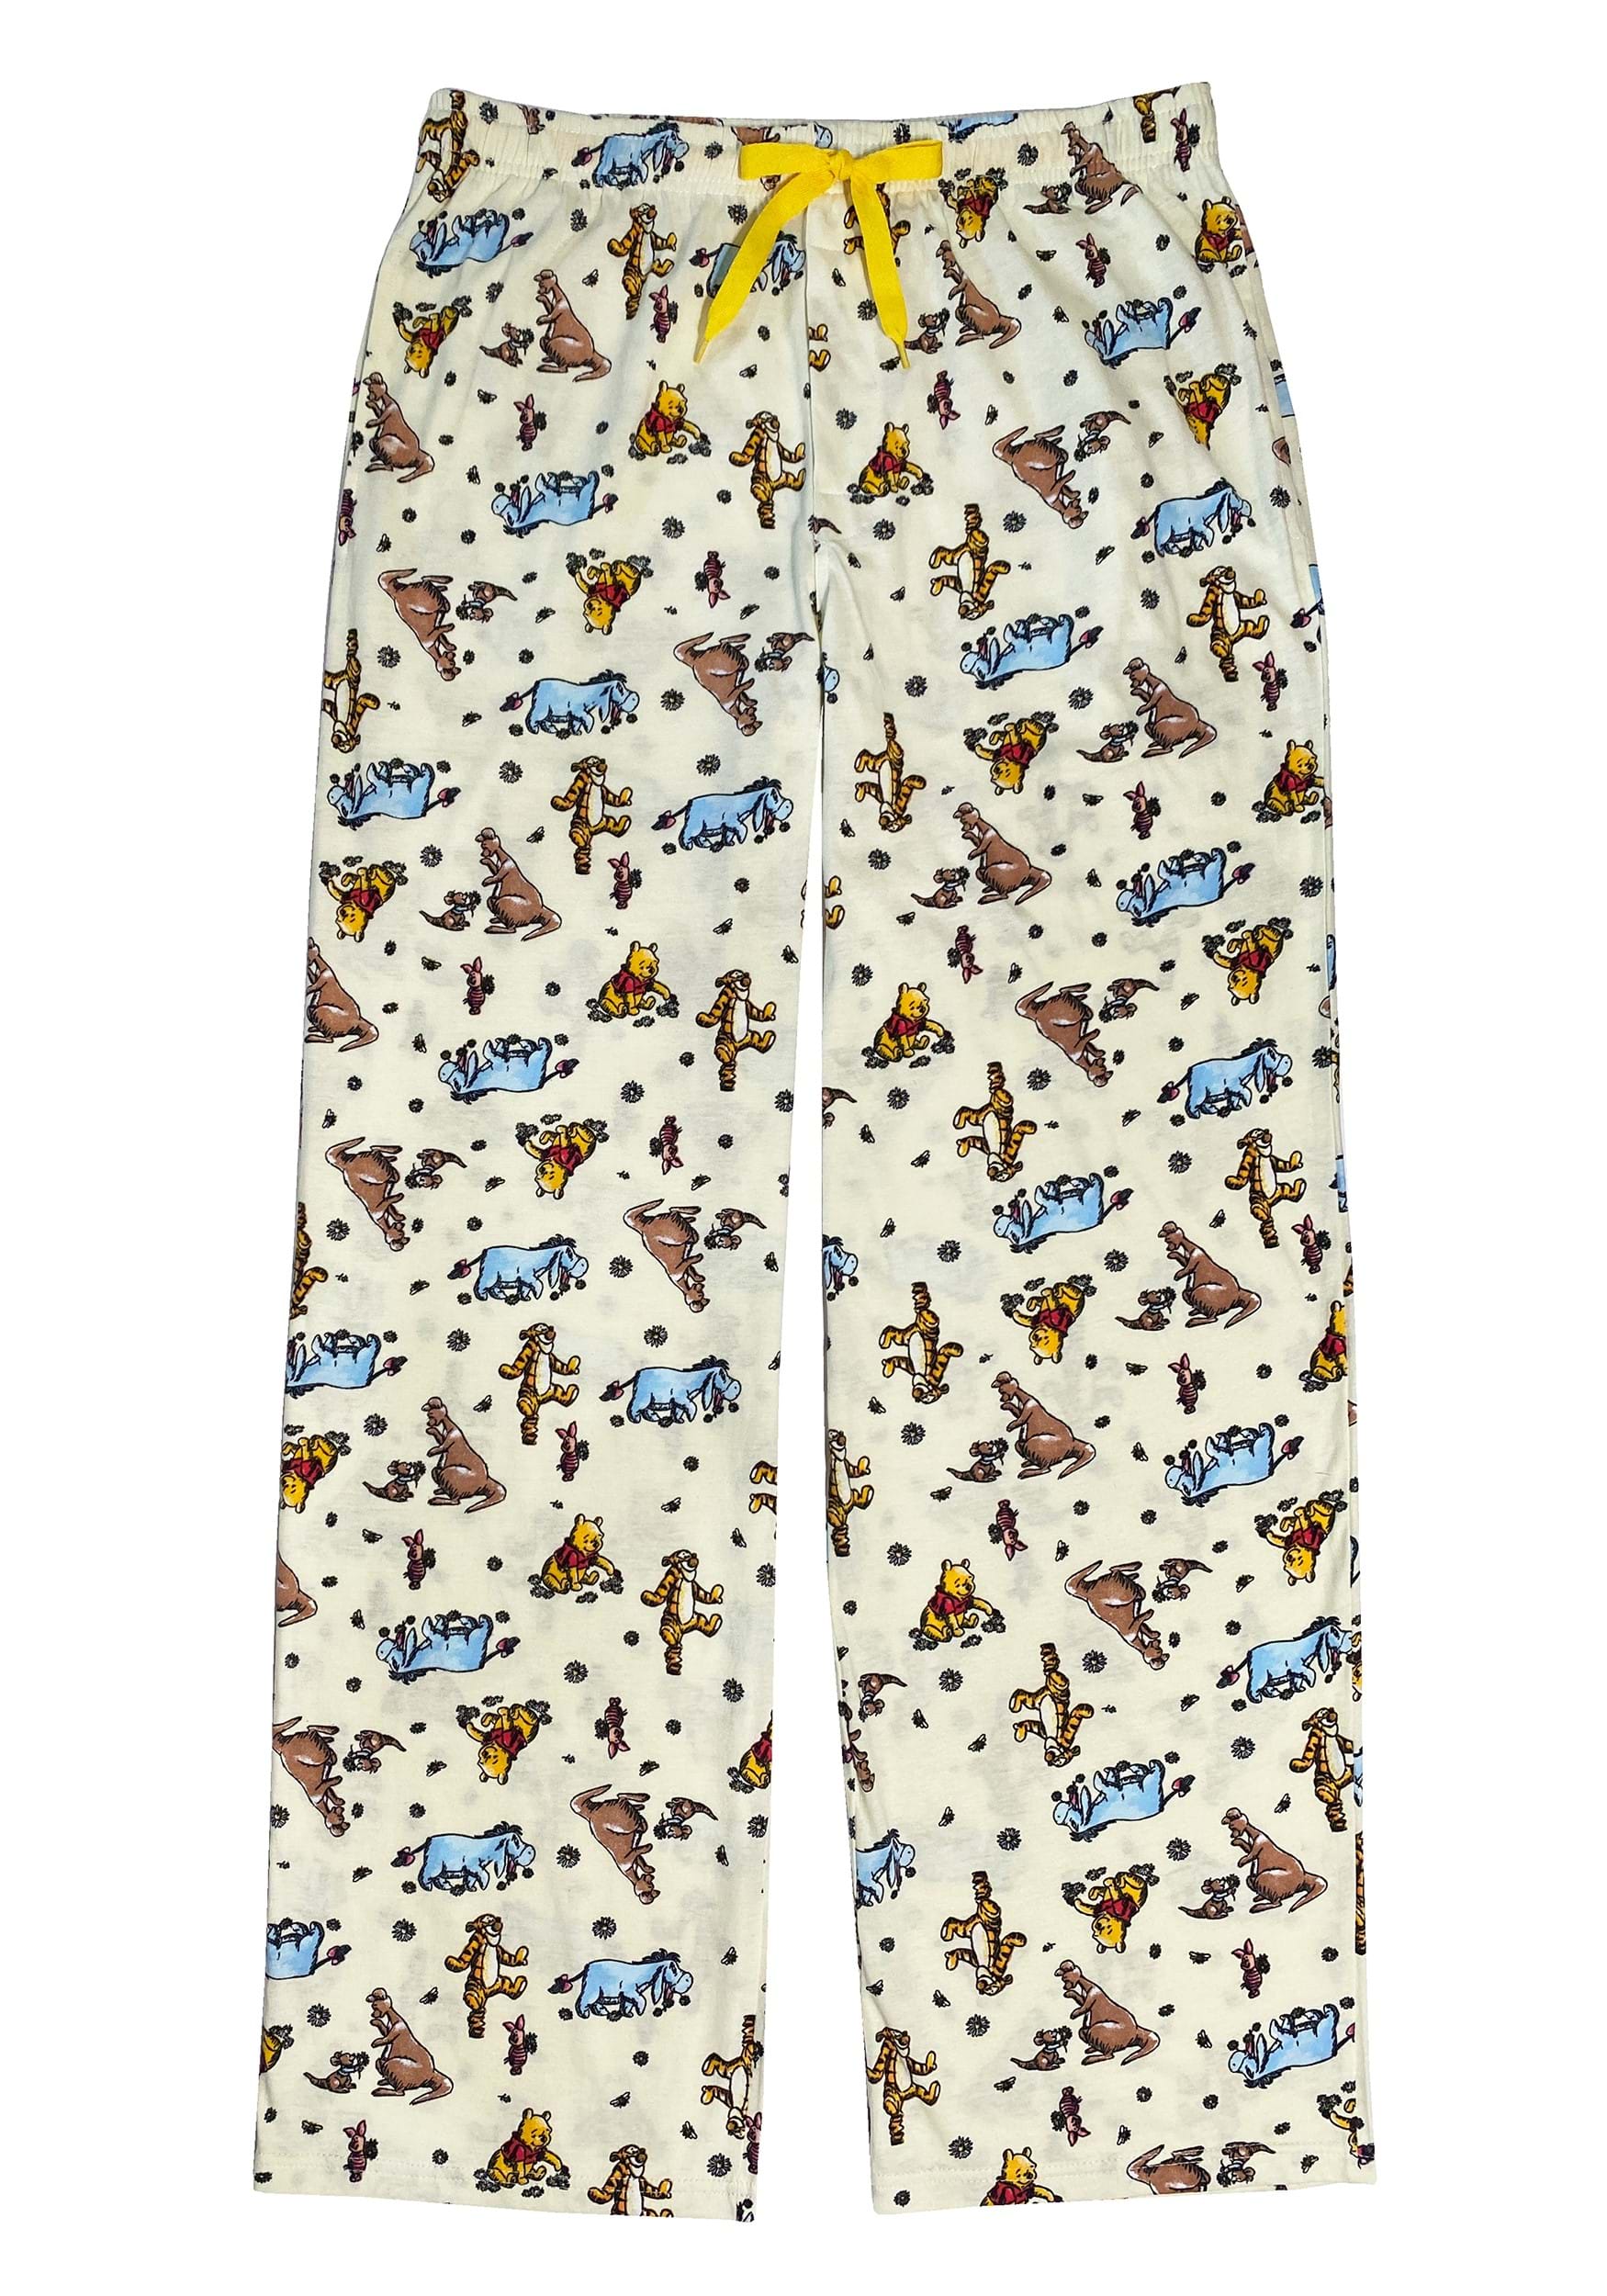 Winnie The Pooh & Friends Pajama Pants